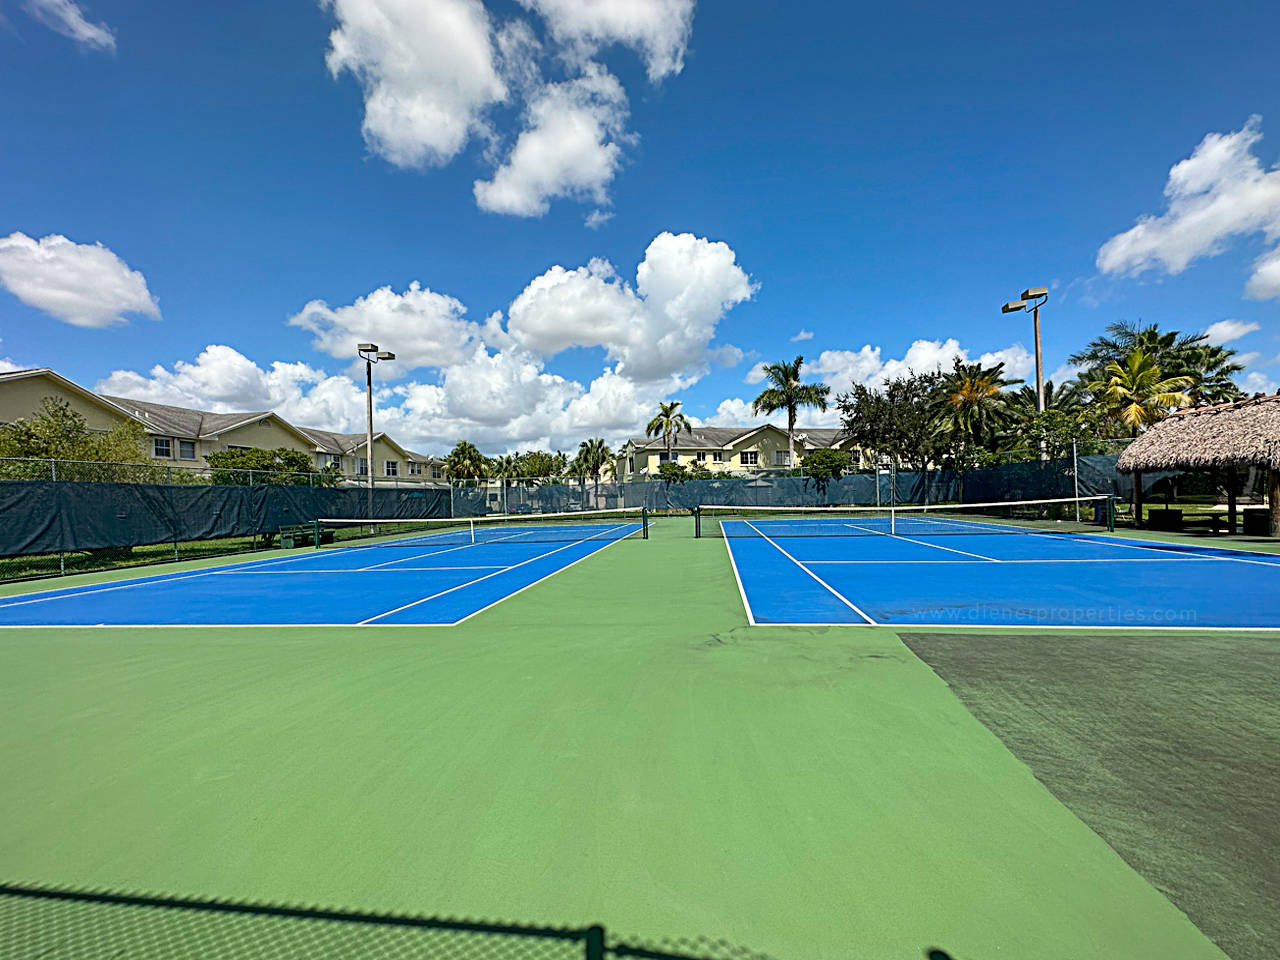 Amaretto Kendall - Tennis Courts